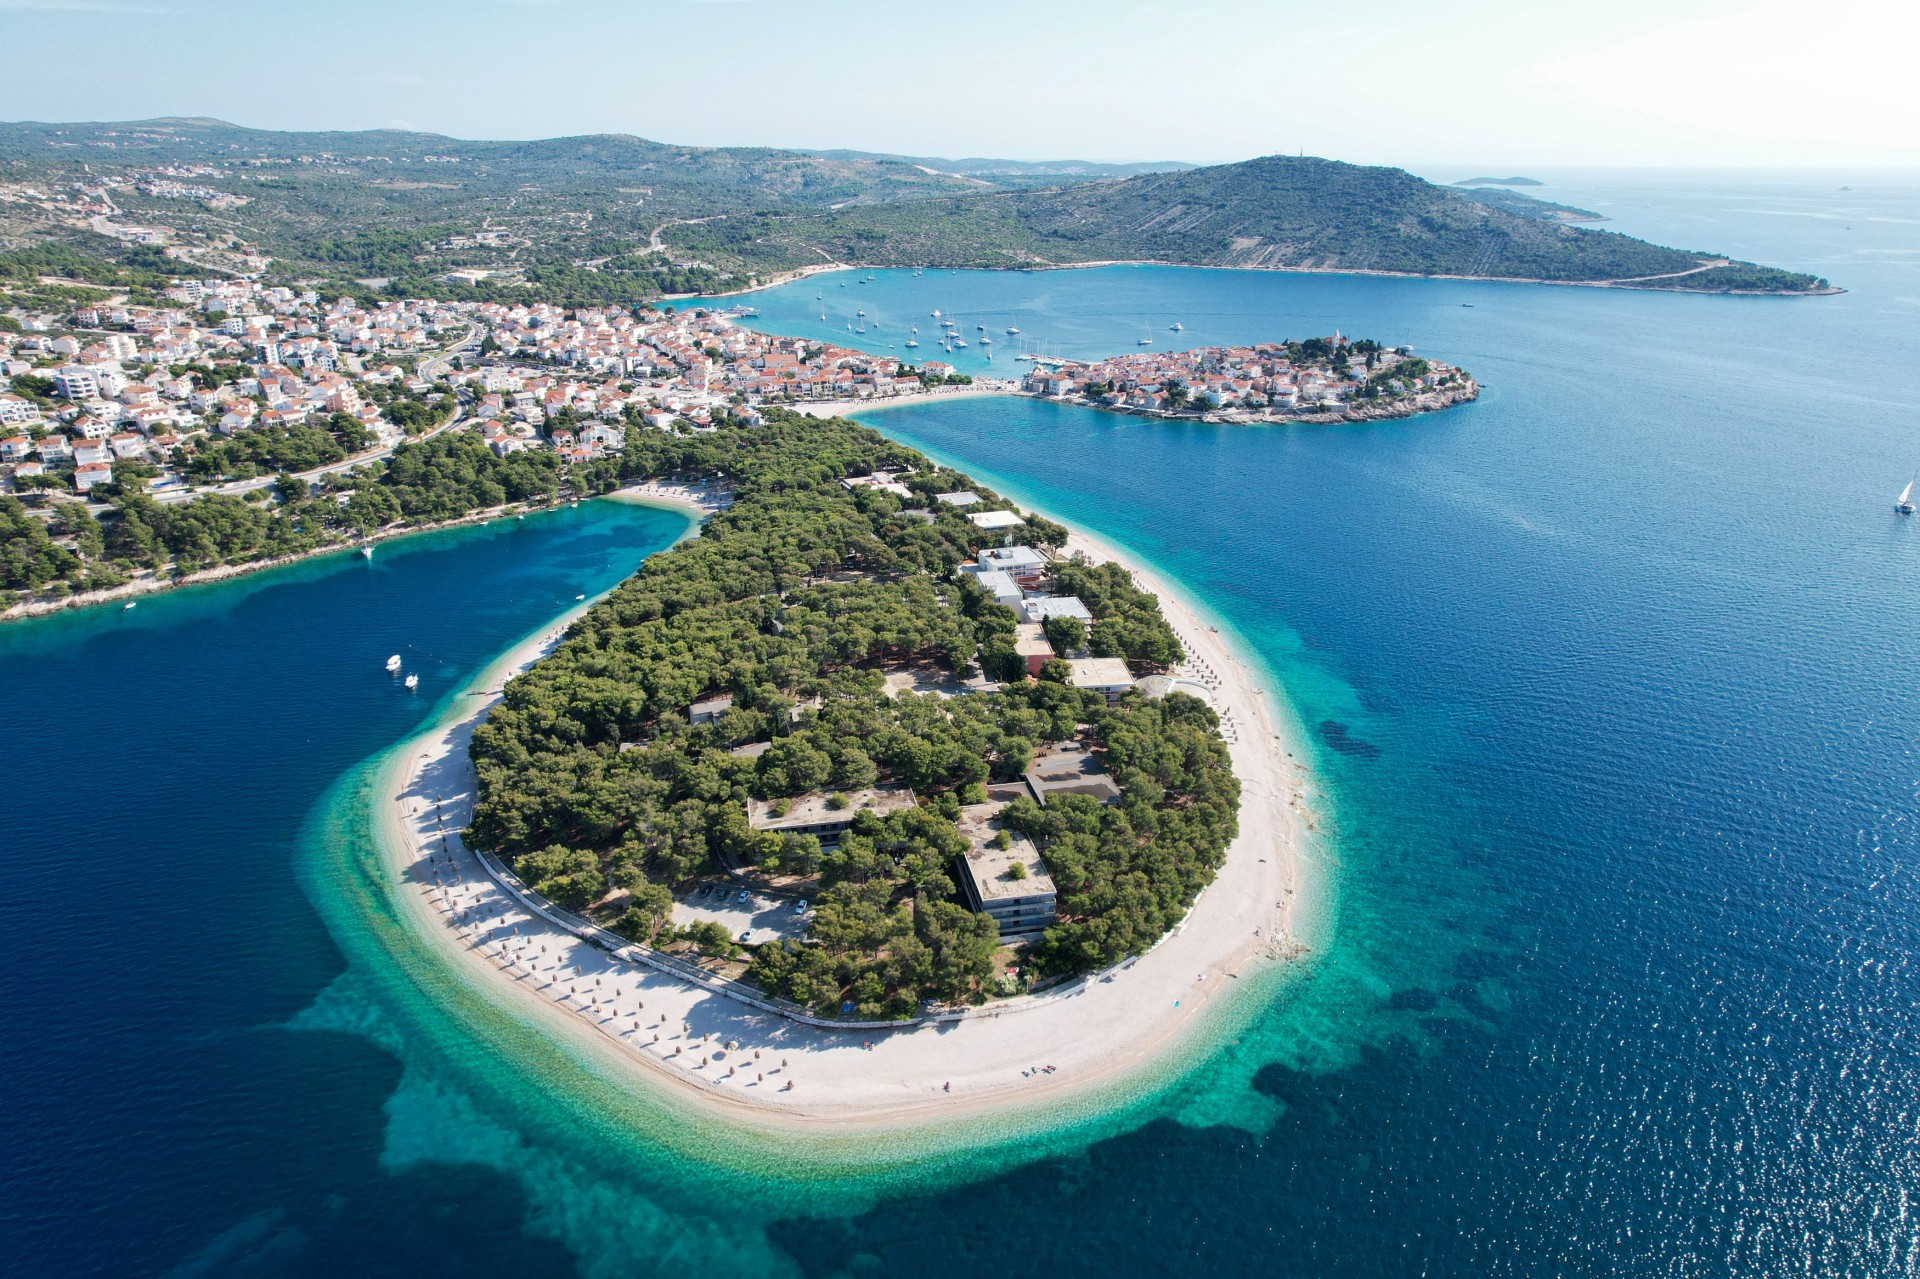 Primosten, ideal destination for family vacation in Croatia